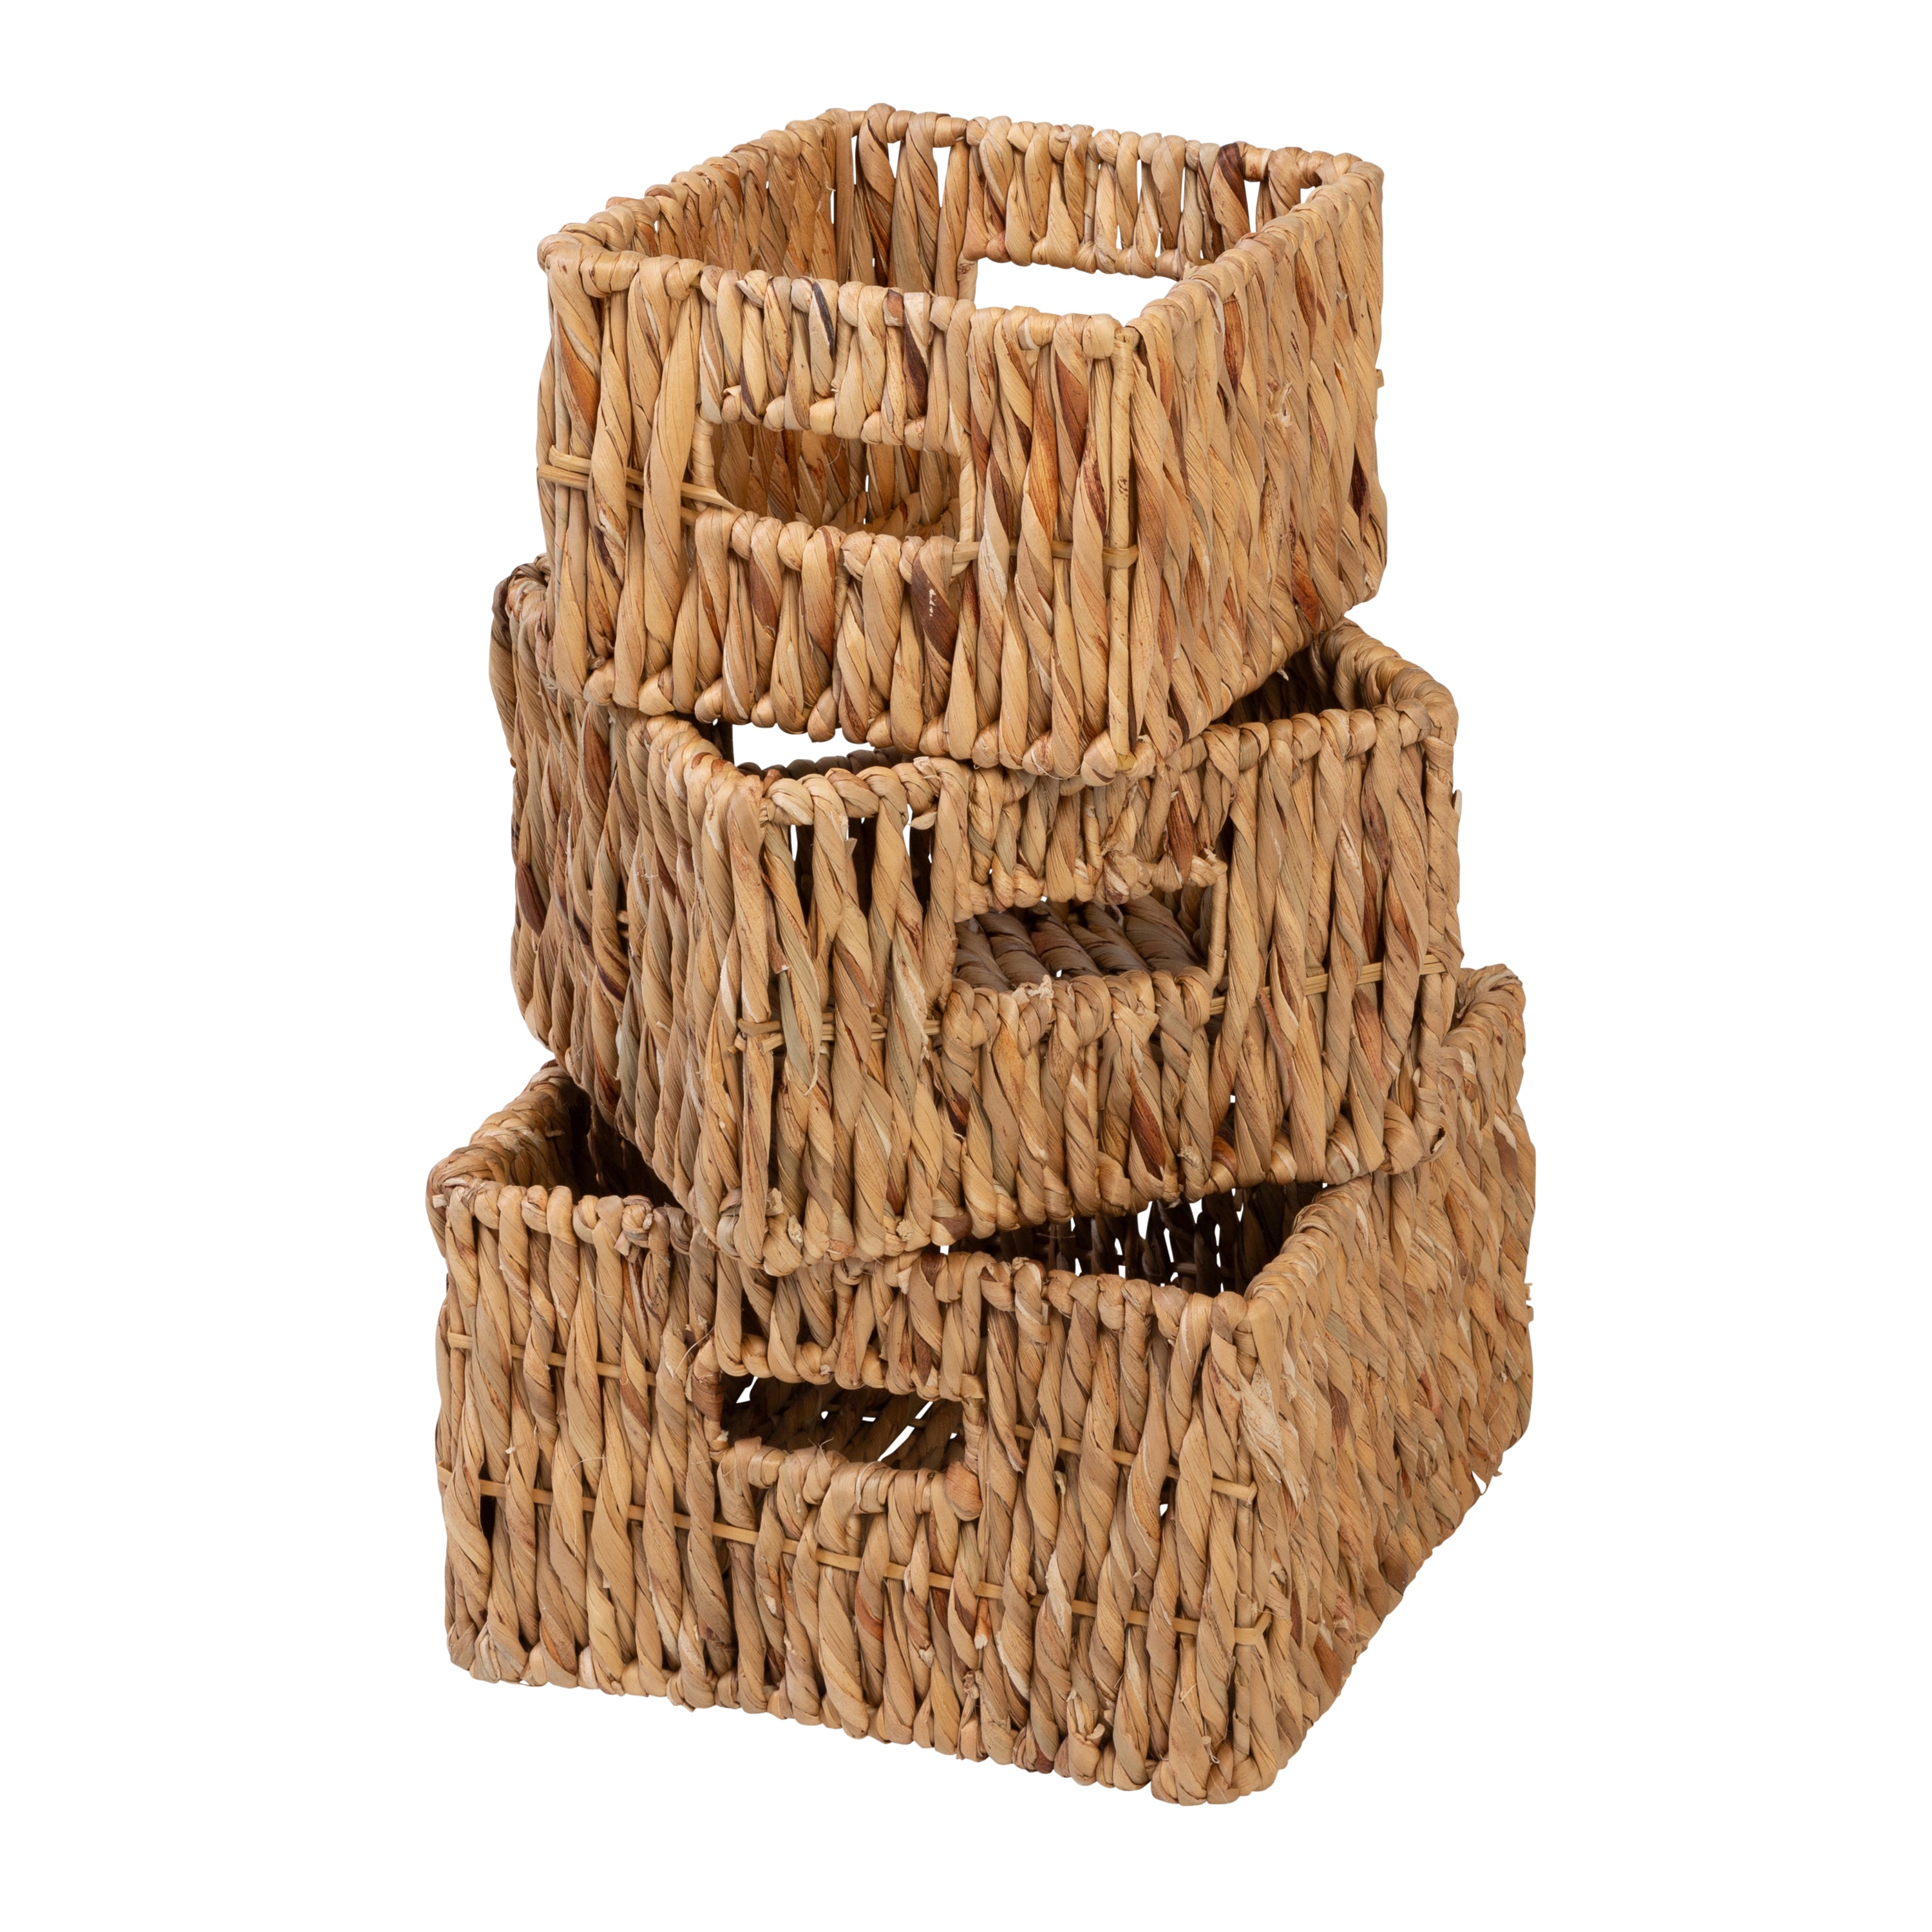 Handmade Storage Baskets, Set of 3 Nesting Sari Baskets